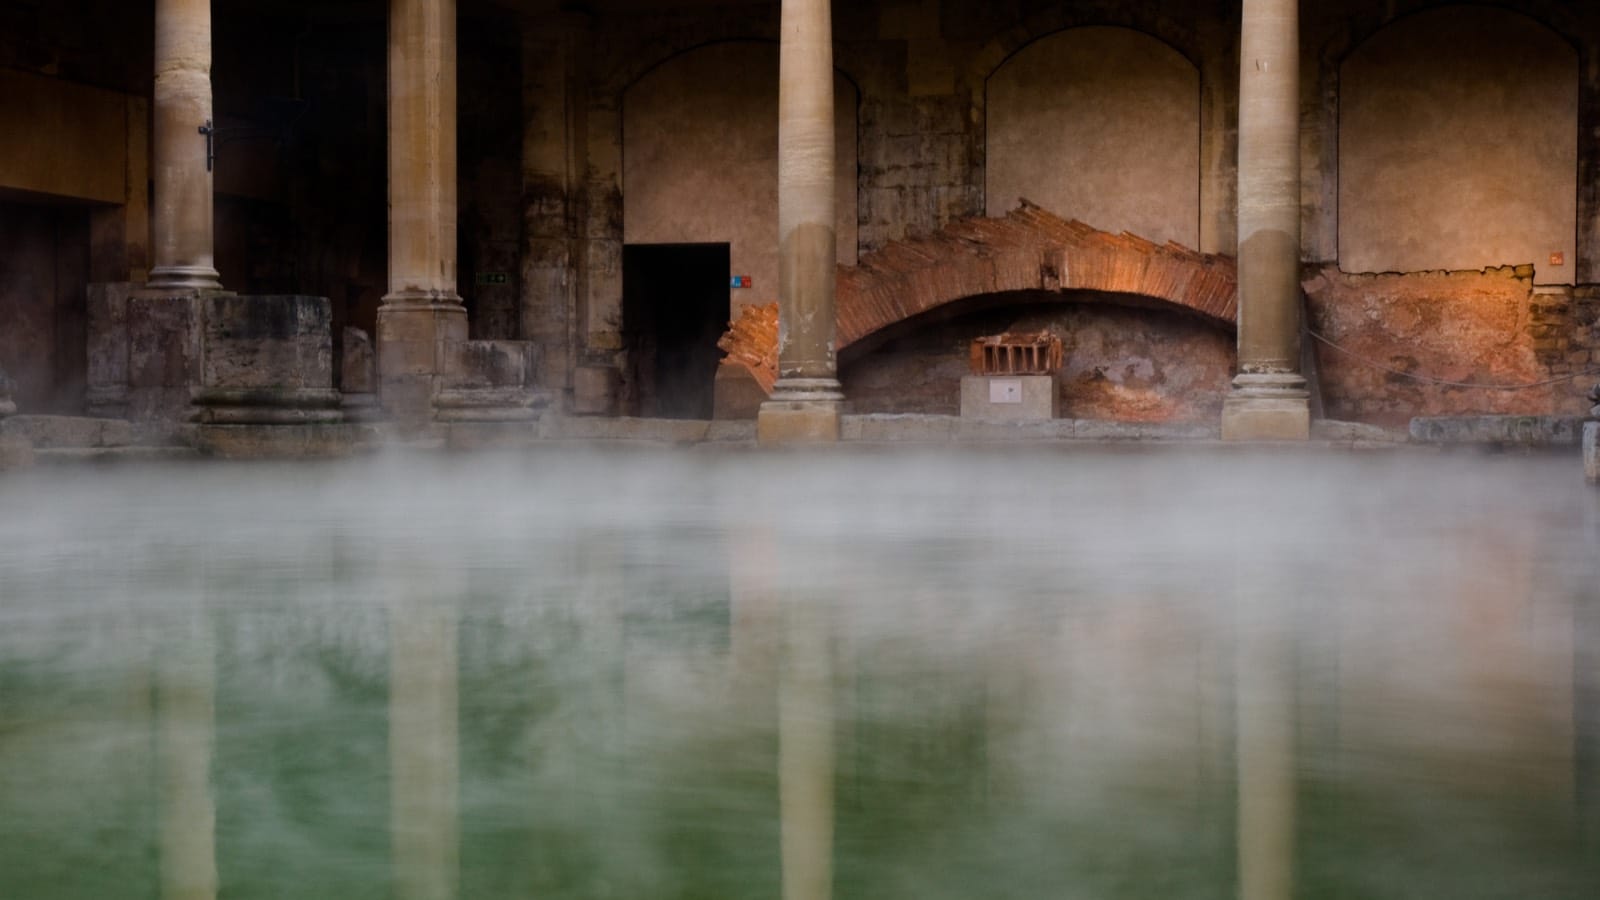 Roman Bath, with heated water